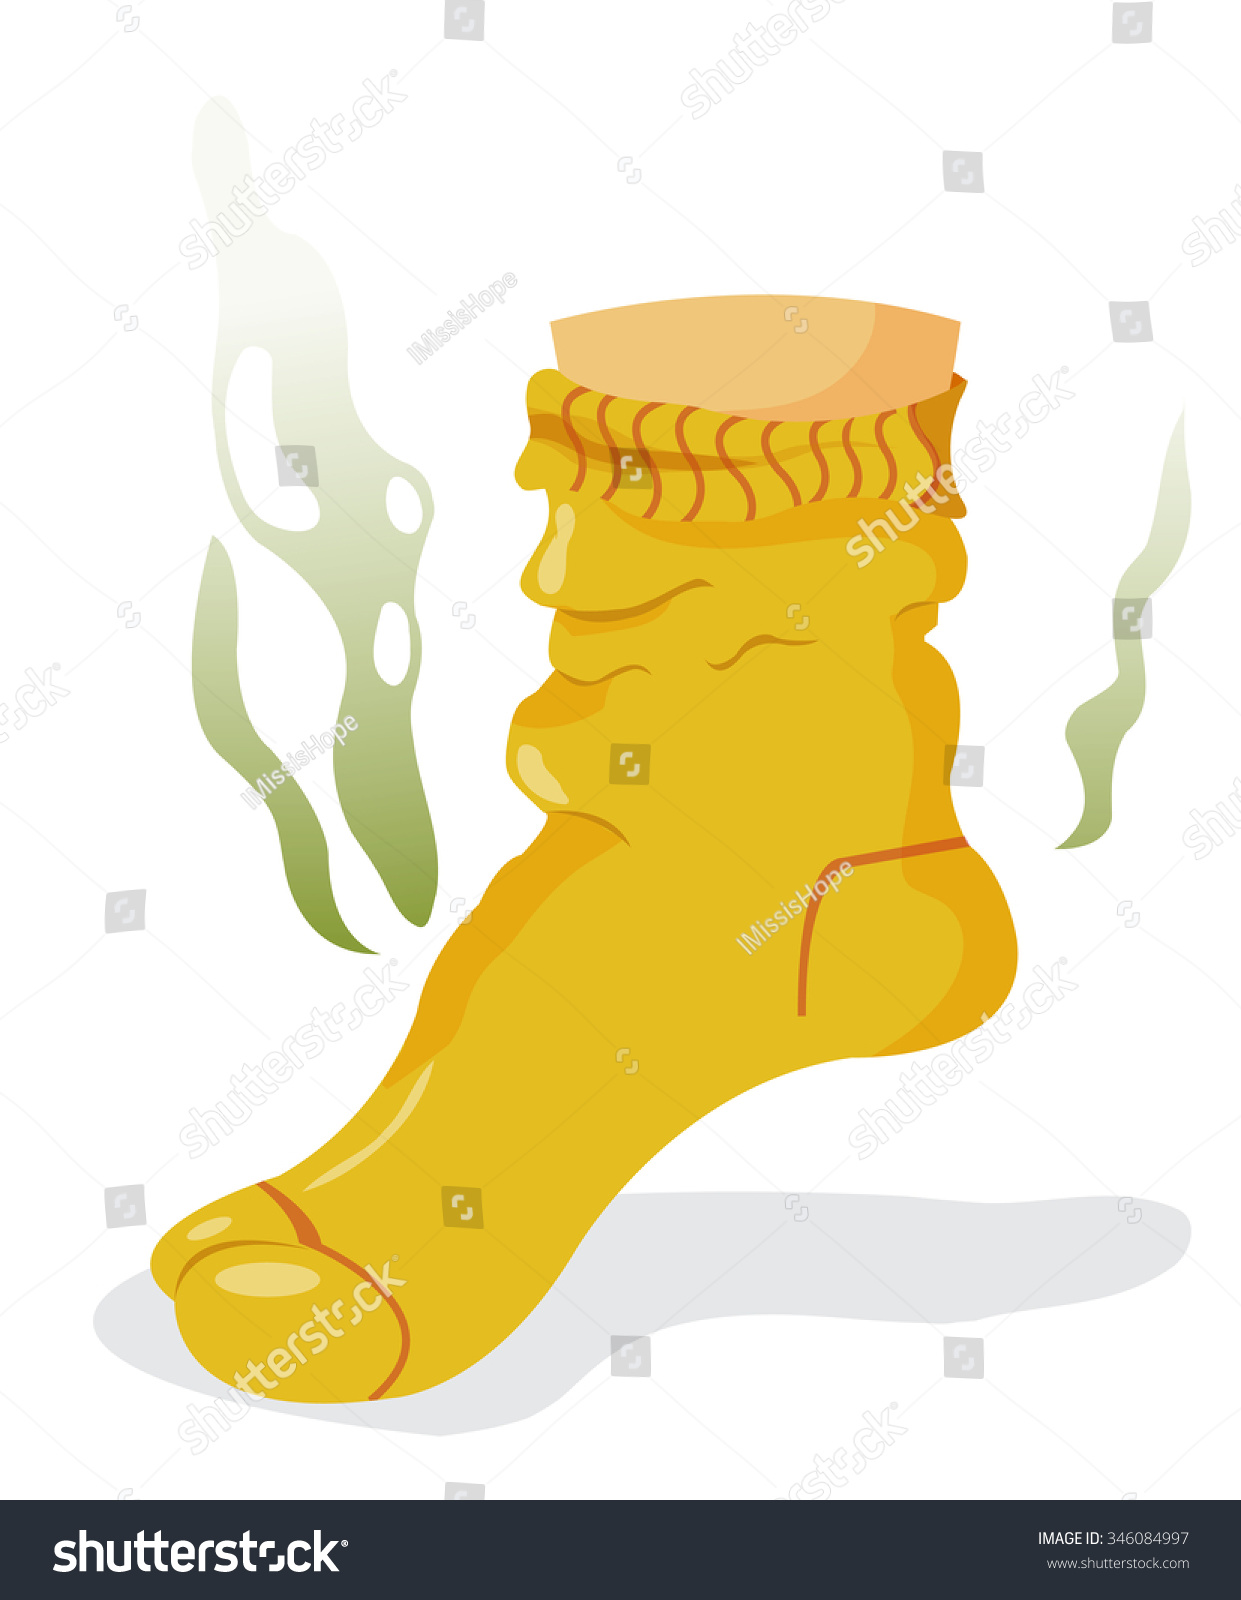 Stinky Sock On The Foot Stock Vector Illustration 346084997 : Shutterstock